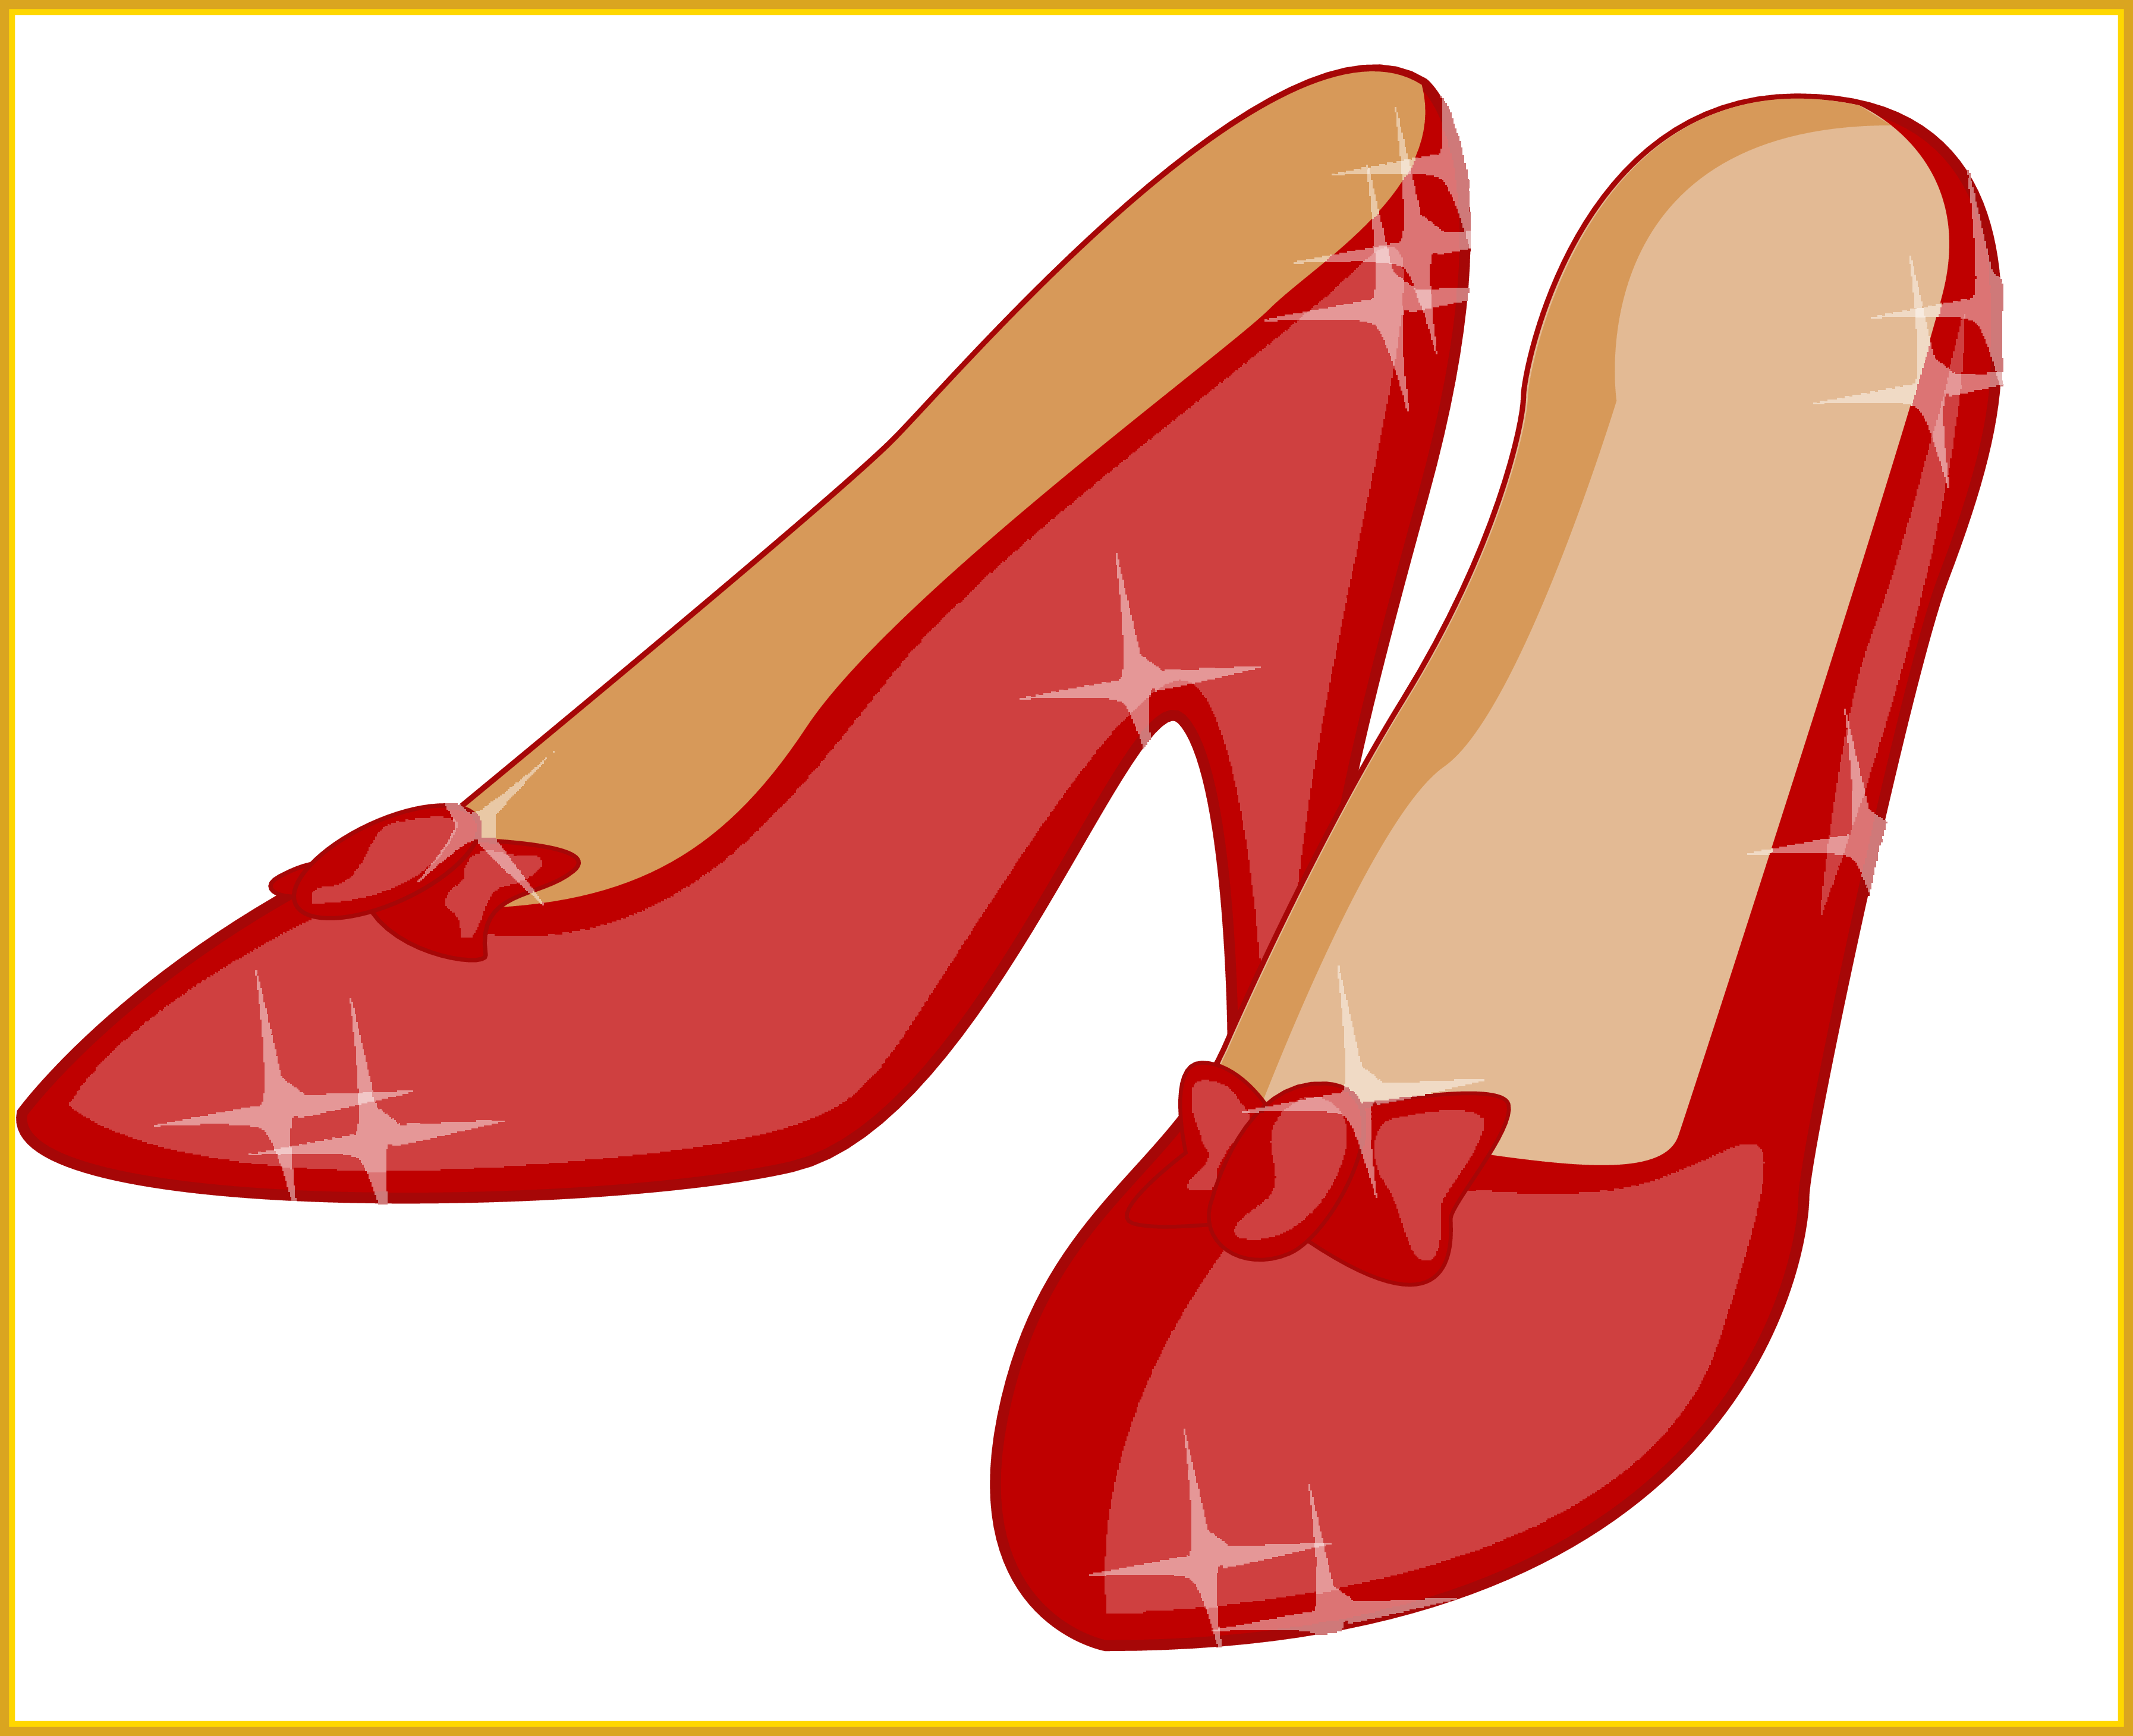 clipart shoes girl shoe